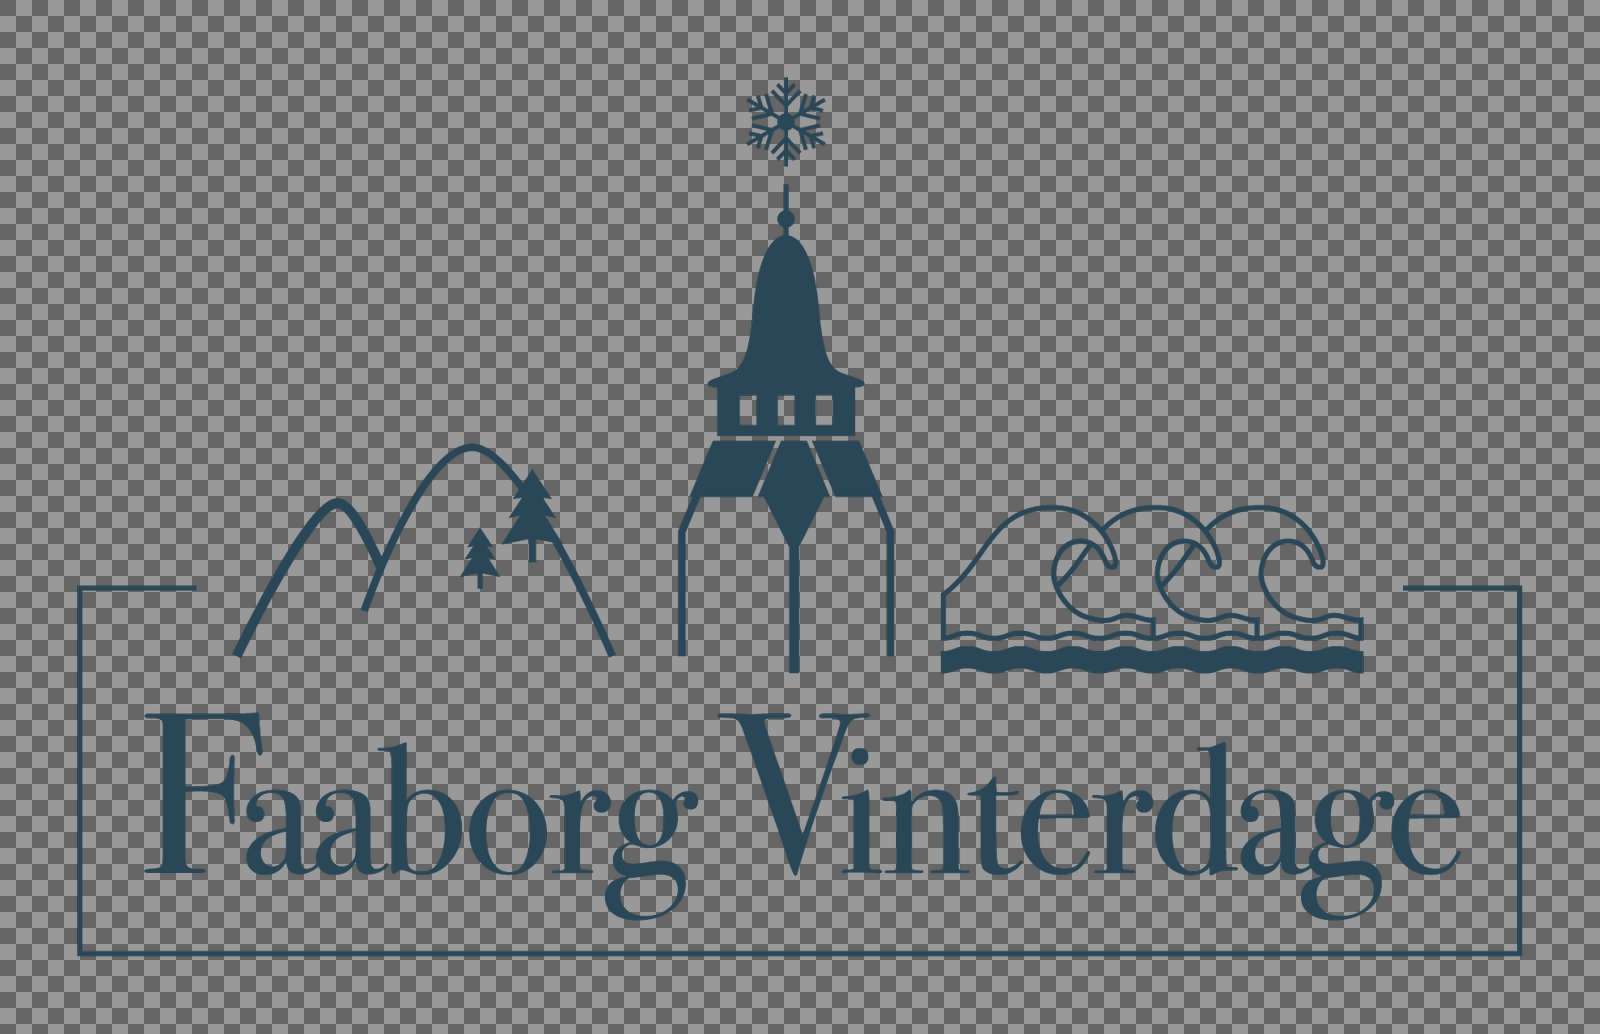 Faaborg Vinterdage logo Bla╠è